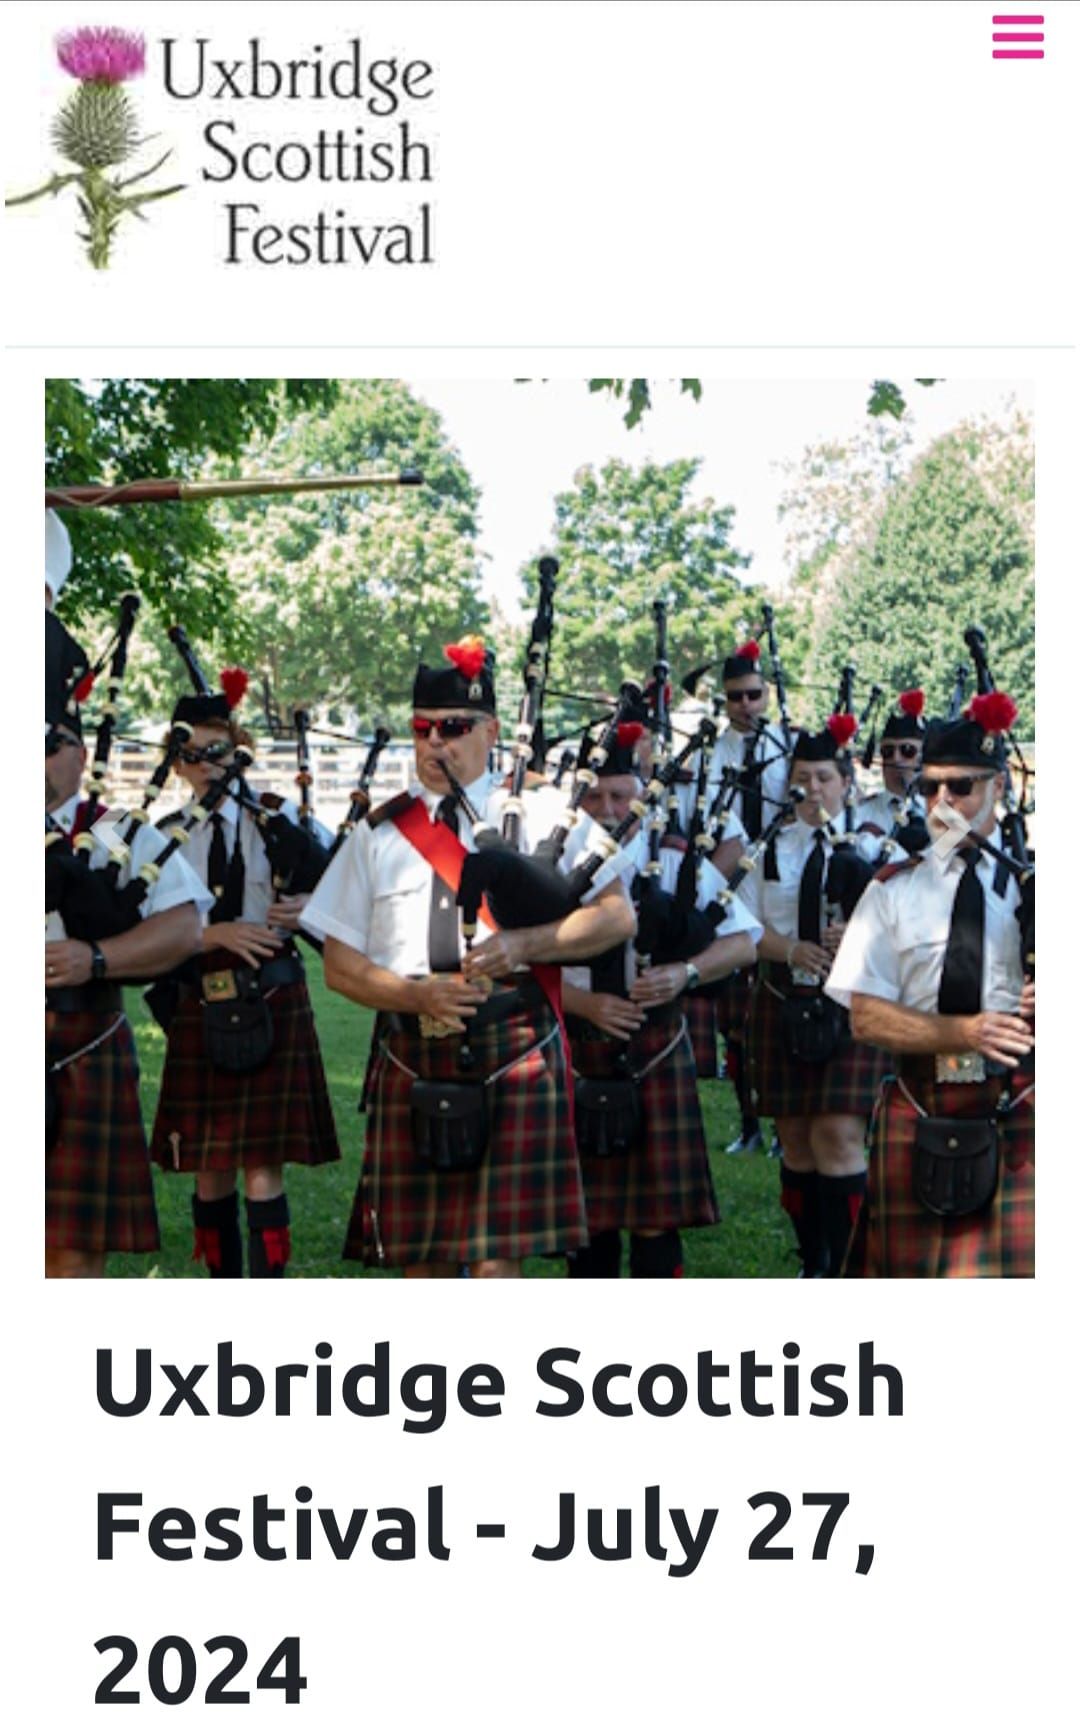 performing @Uxbridge Scottish Festival